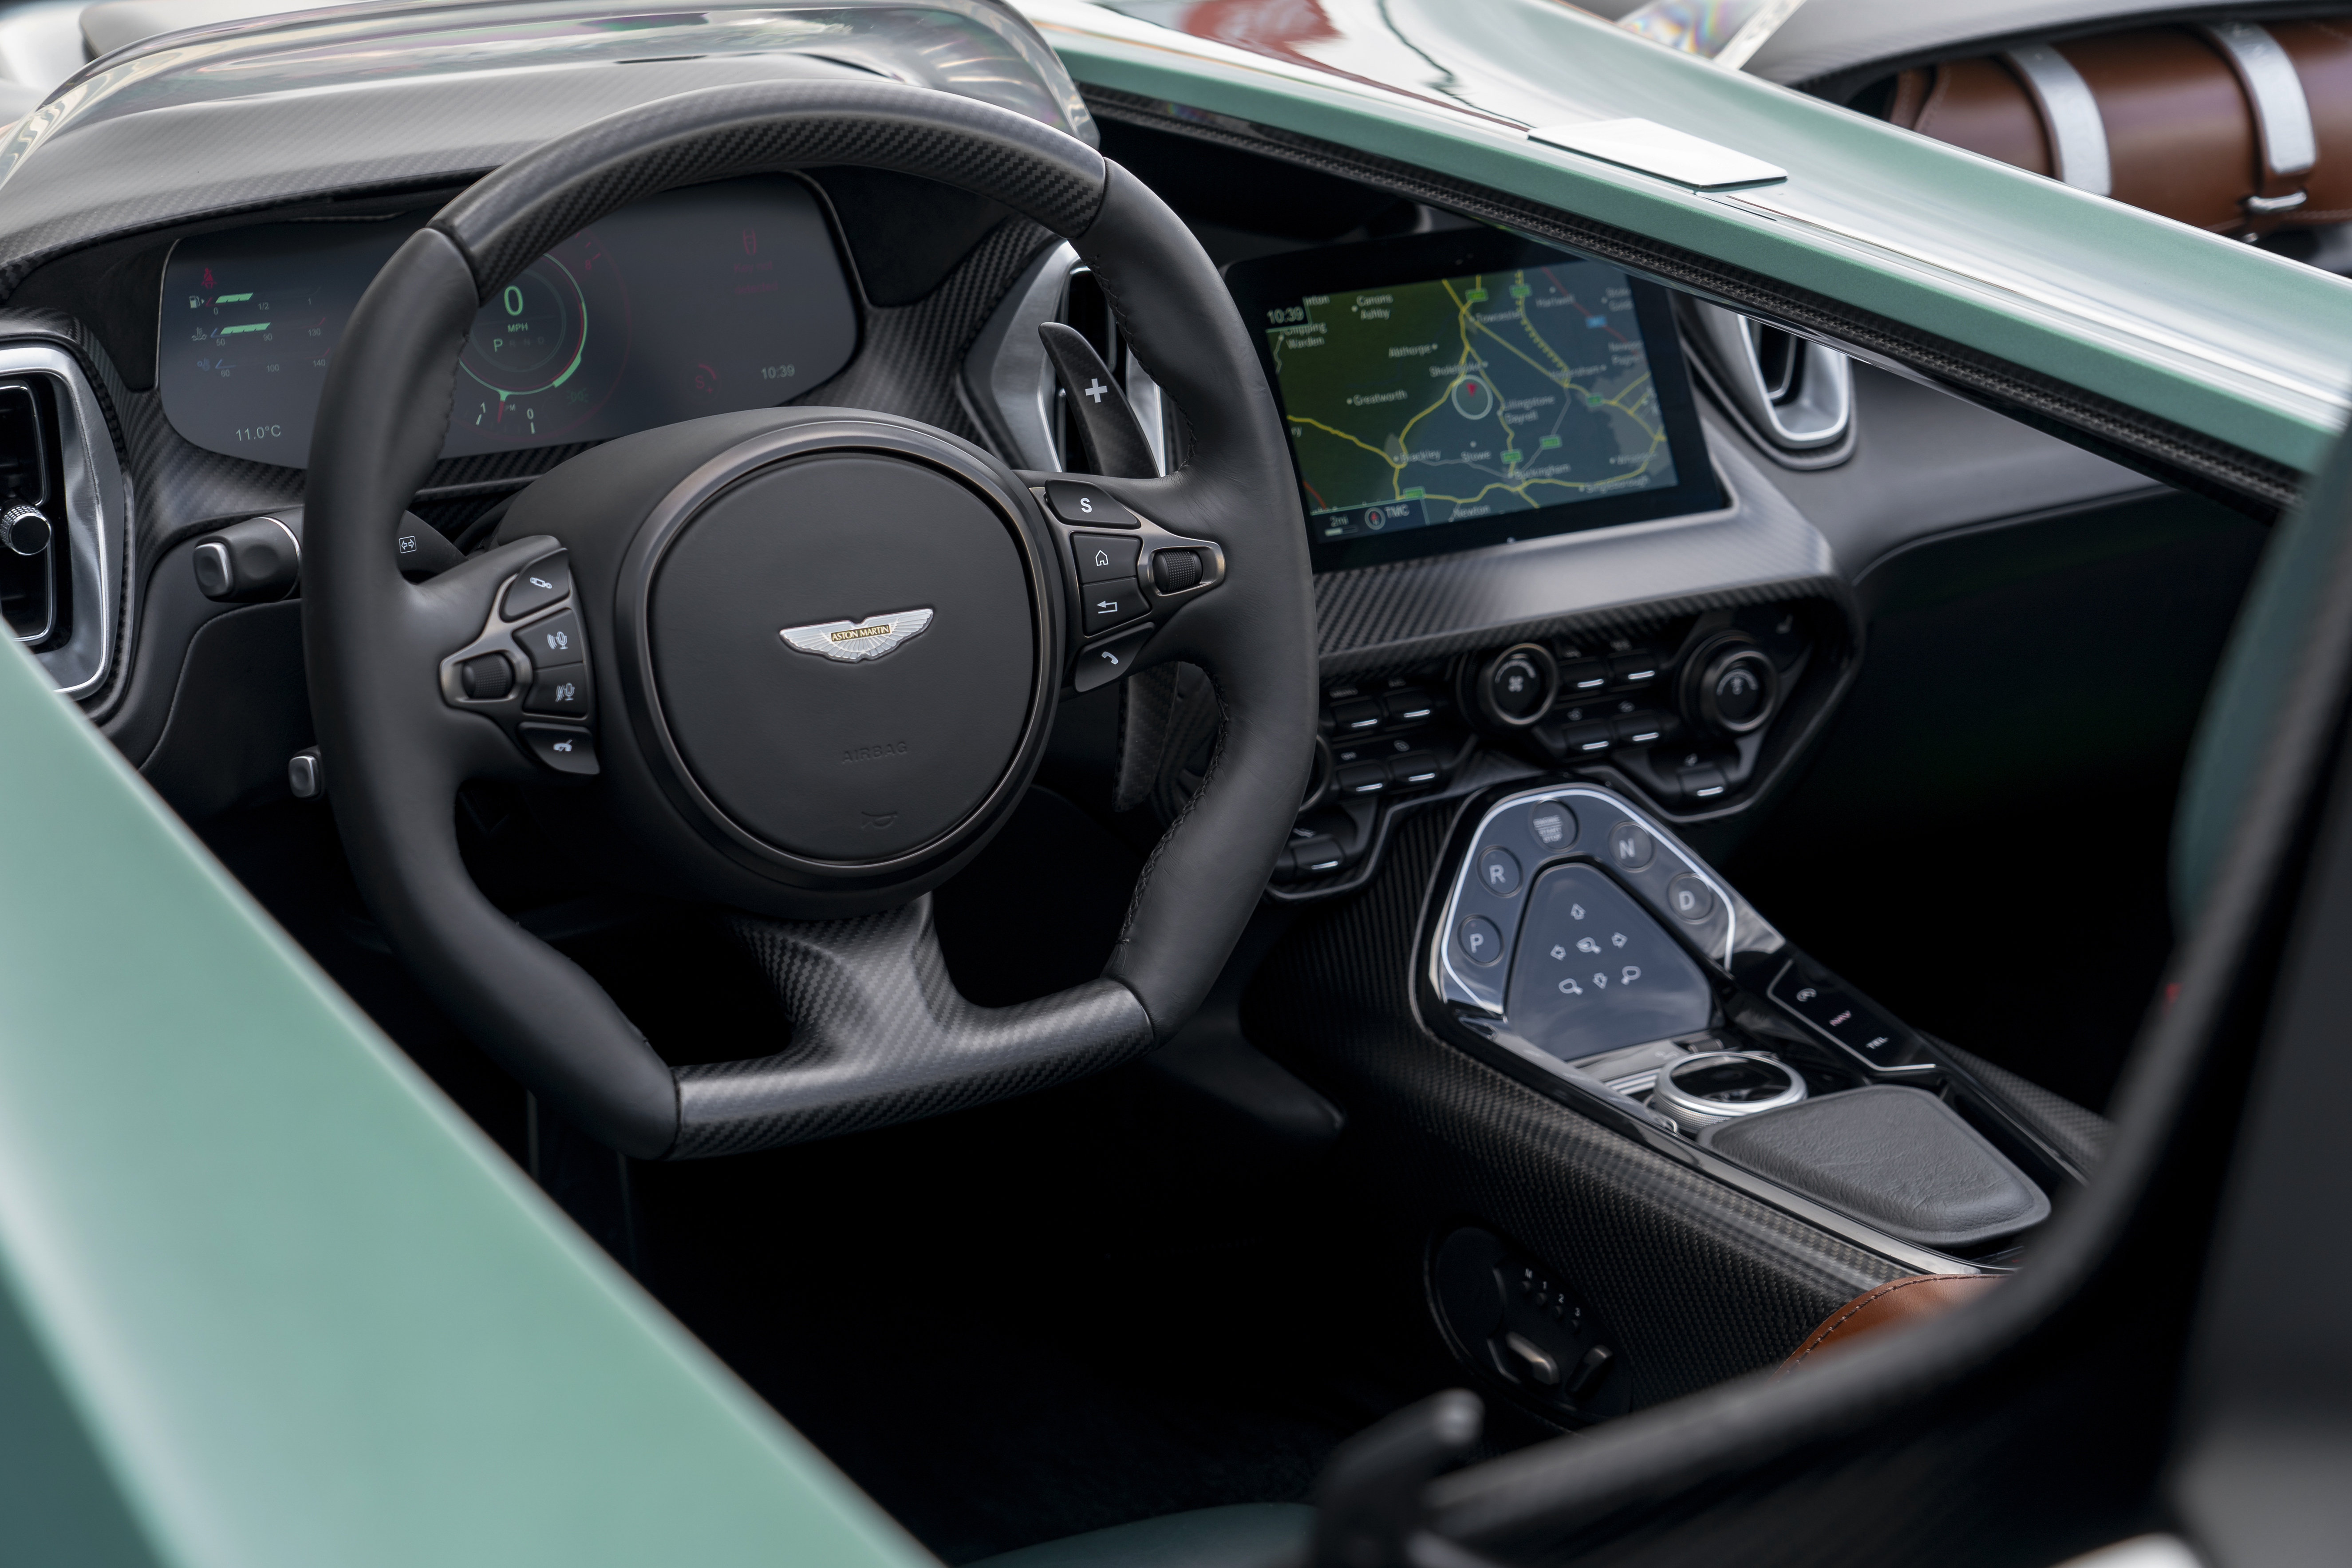 Force of nature: Test driving the Aston Martin V12 Speedster